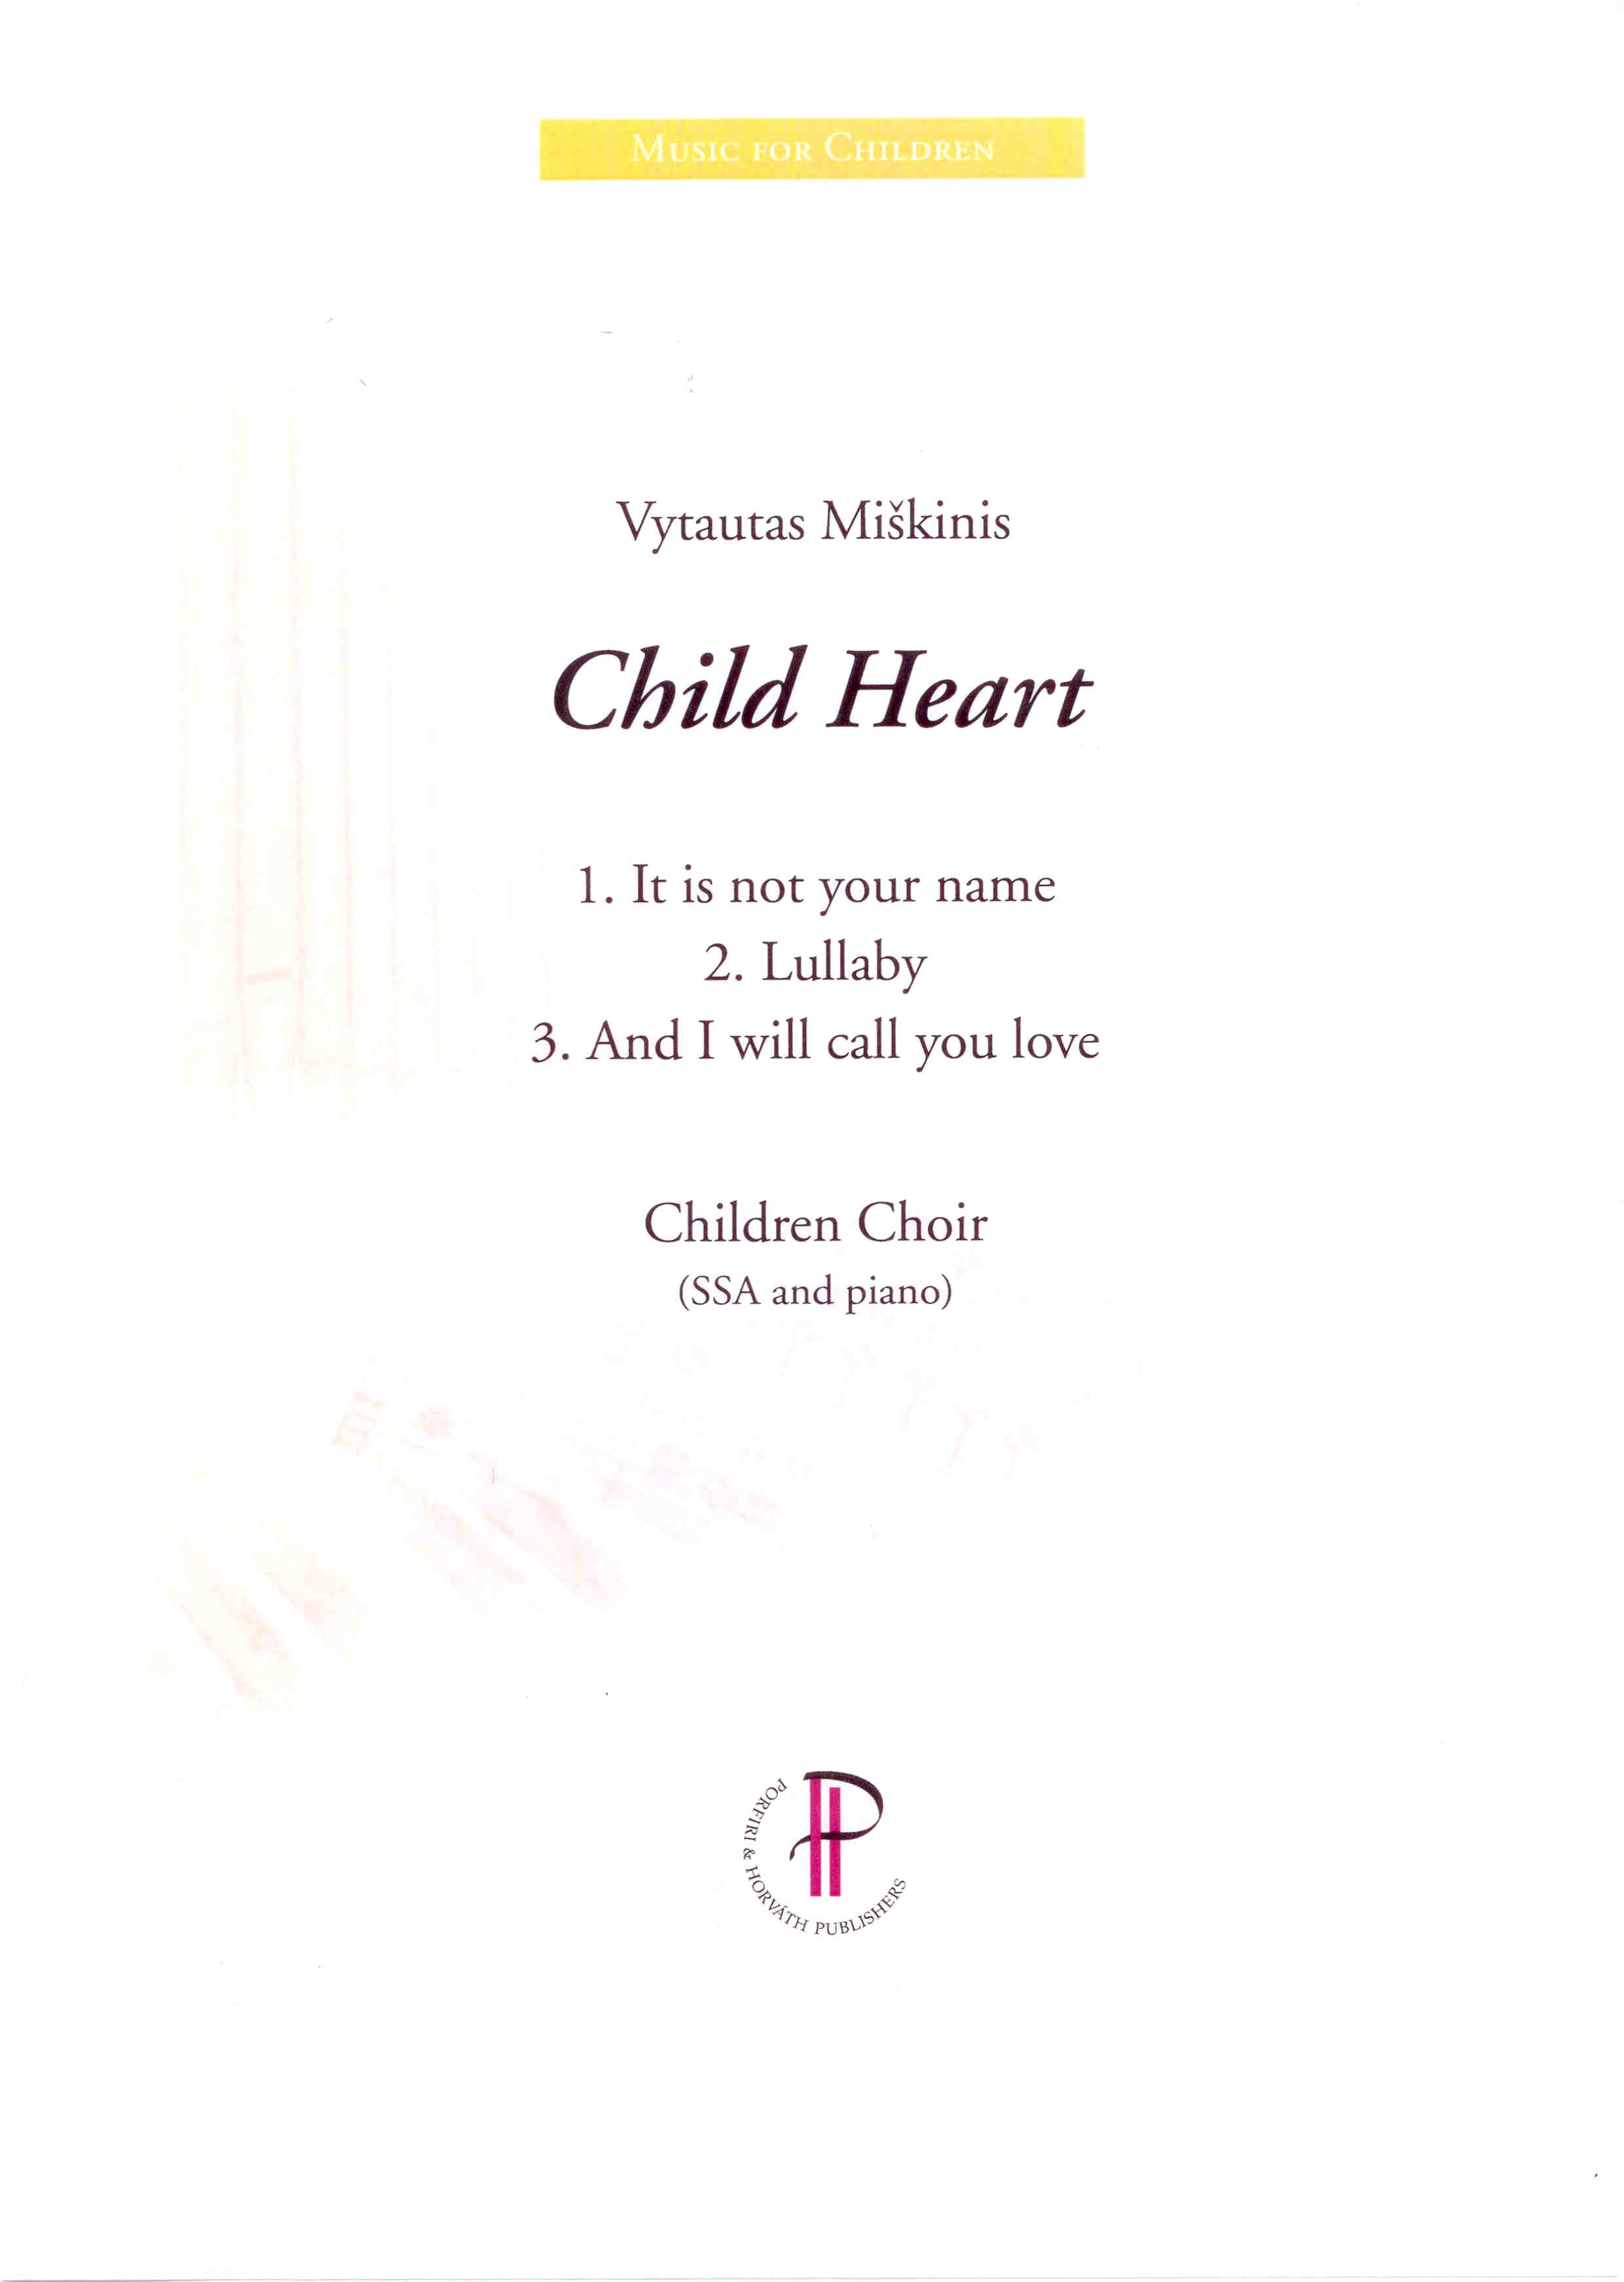 Child Heart - Show sample score